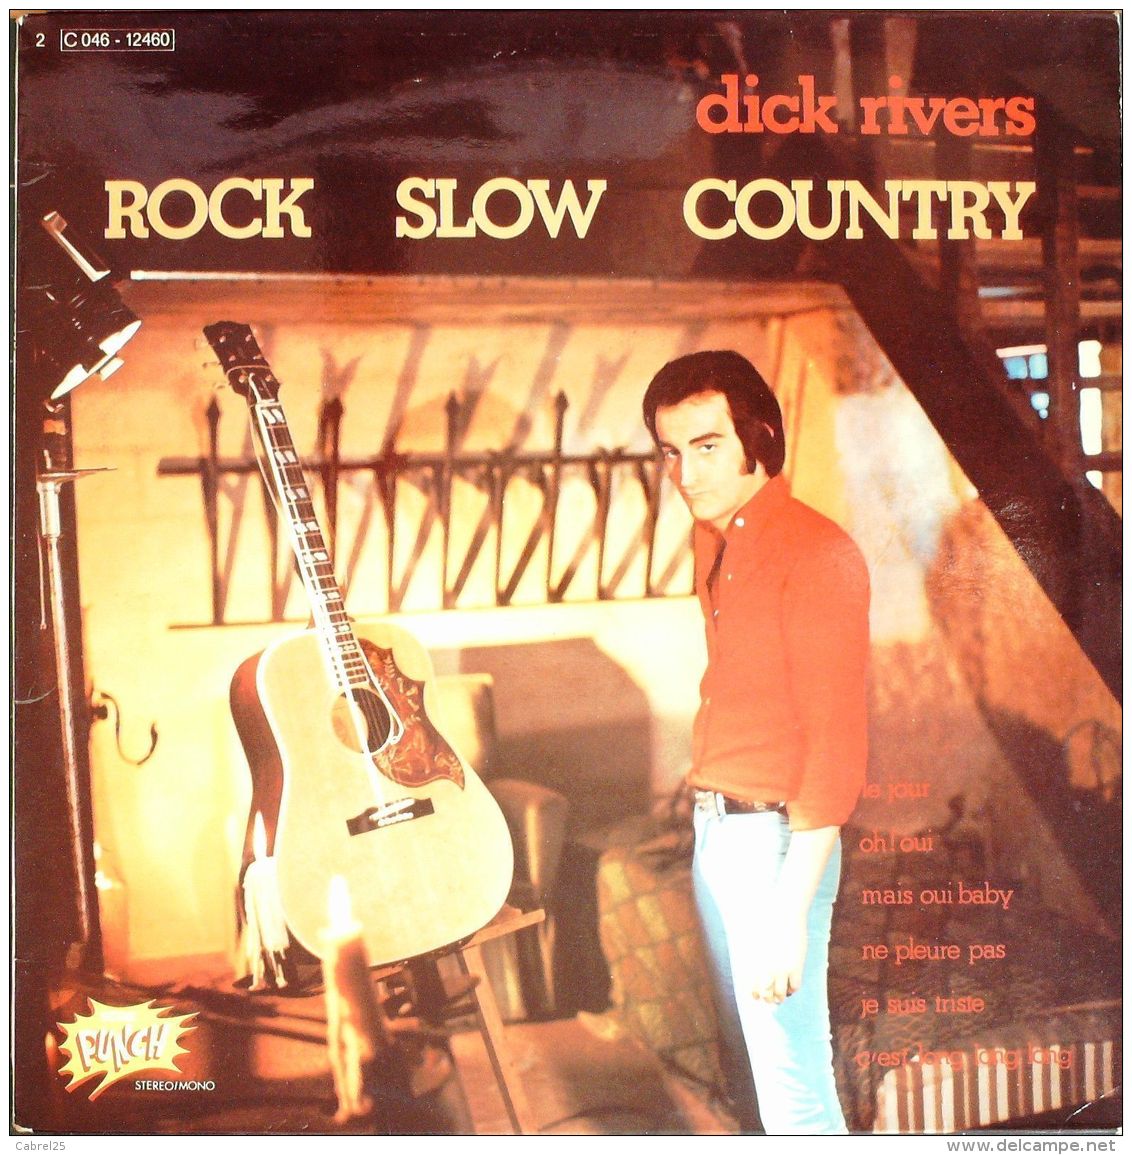 DICK RIVERS-33cm-VINYLE-LP-C046 12460 - Estampes & Gravures